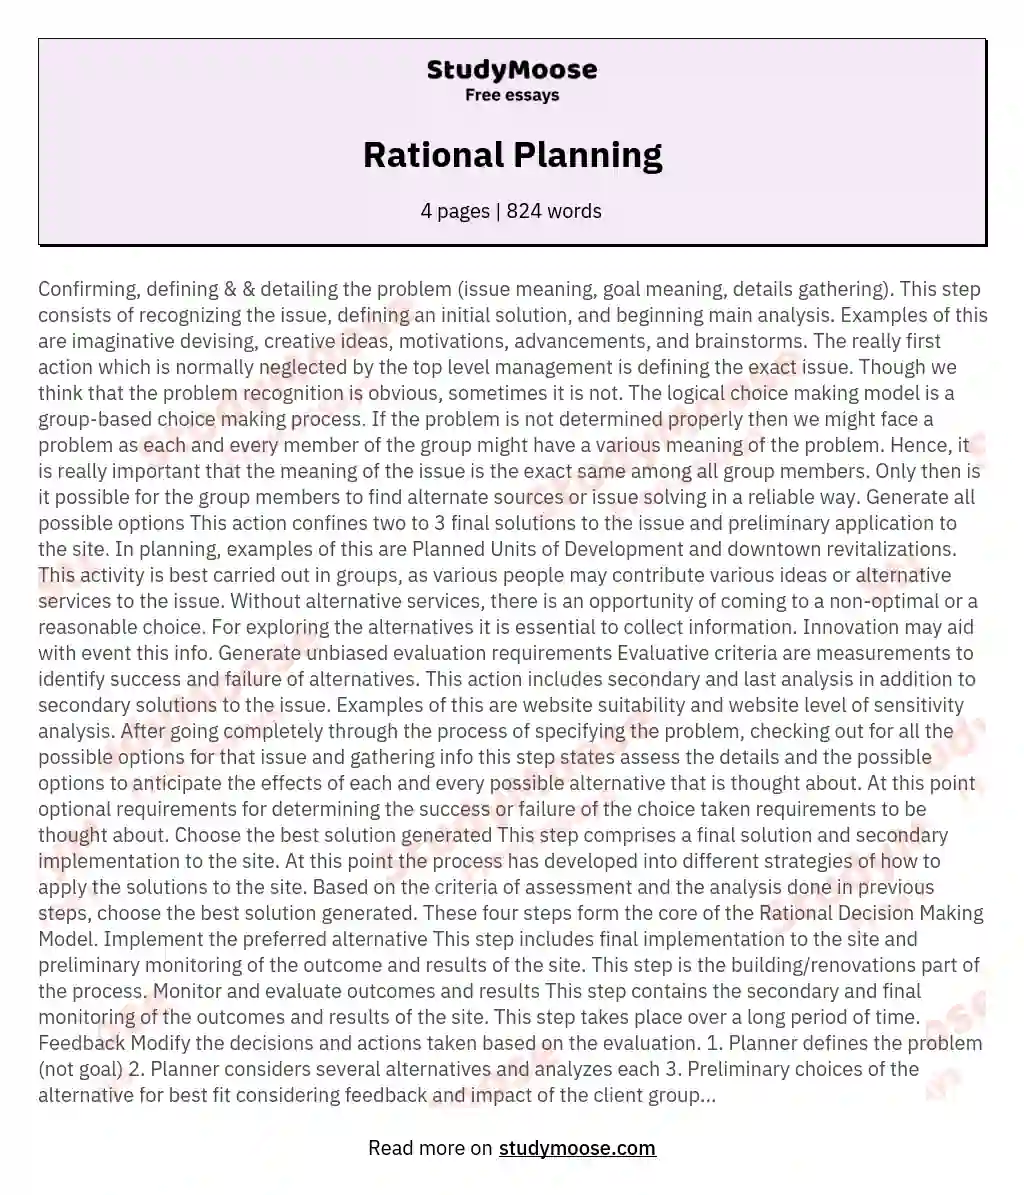 Rational Planning essay